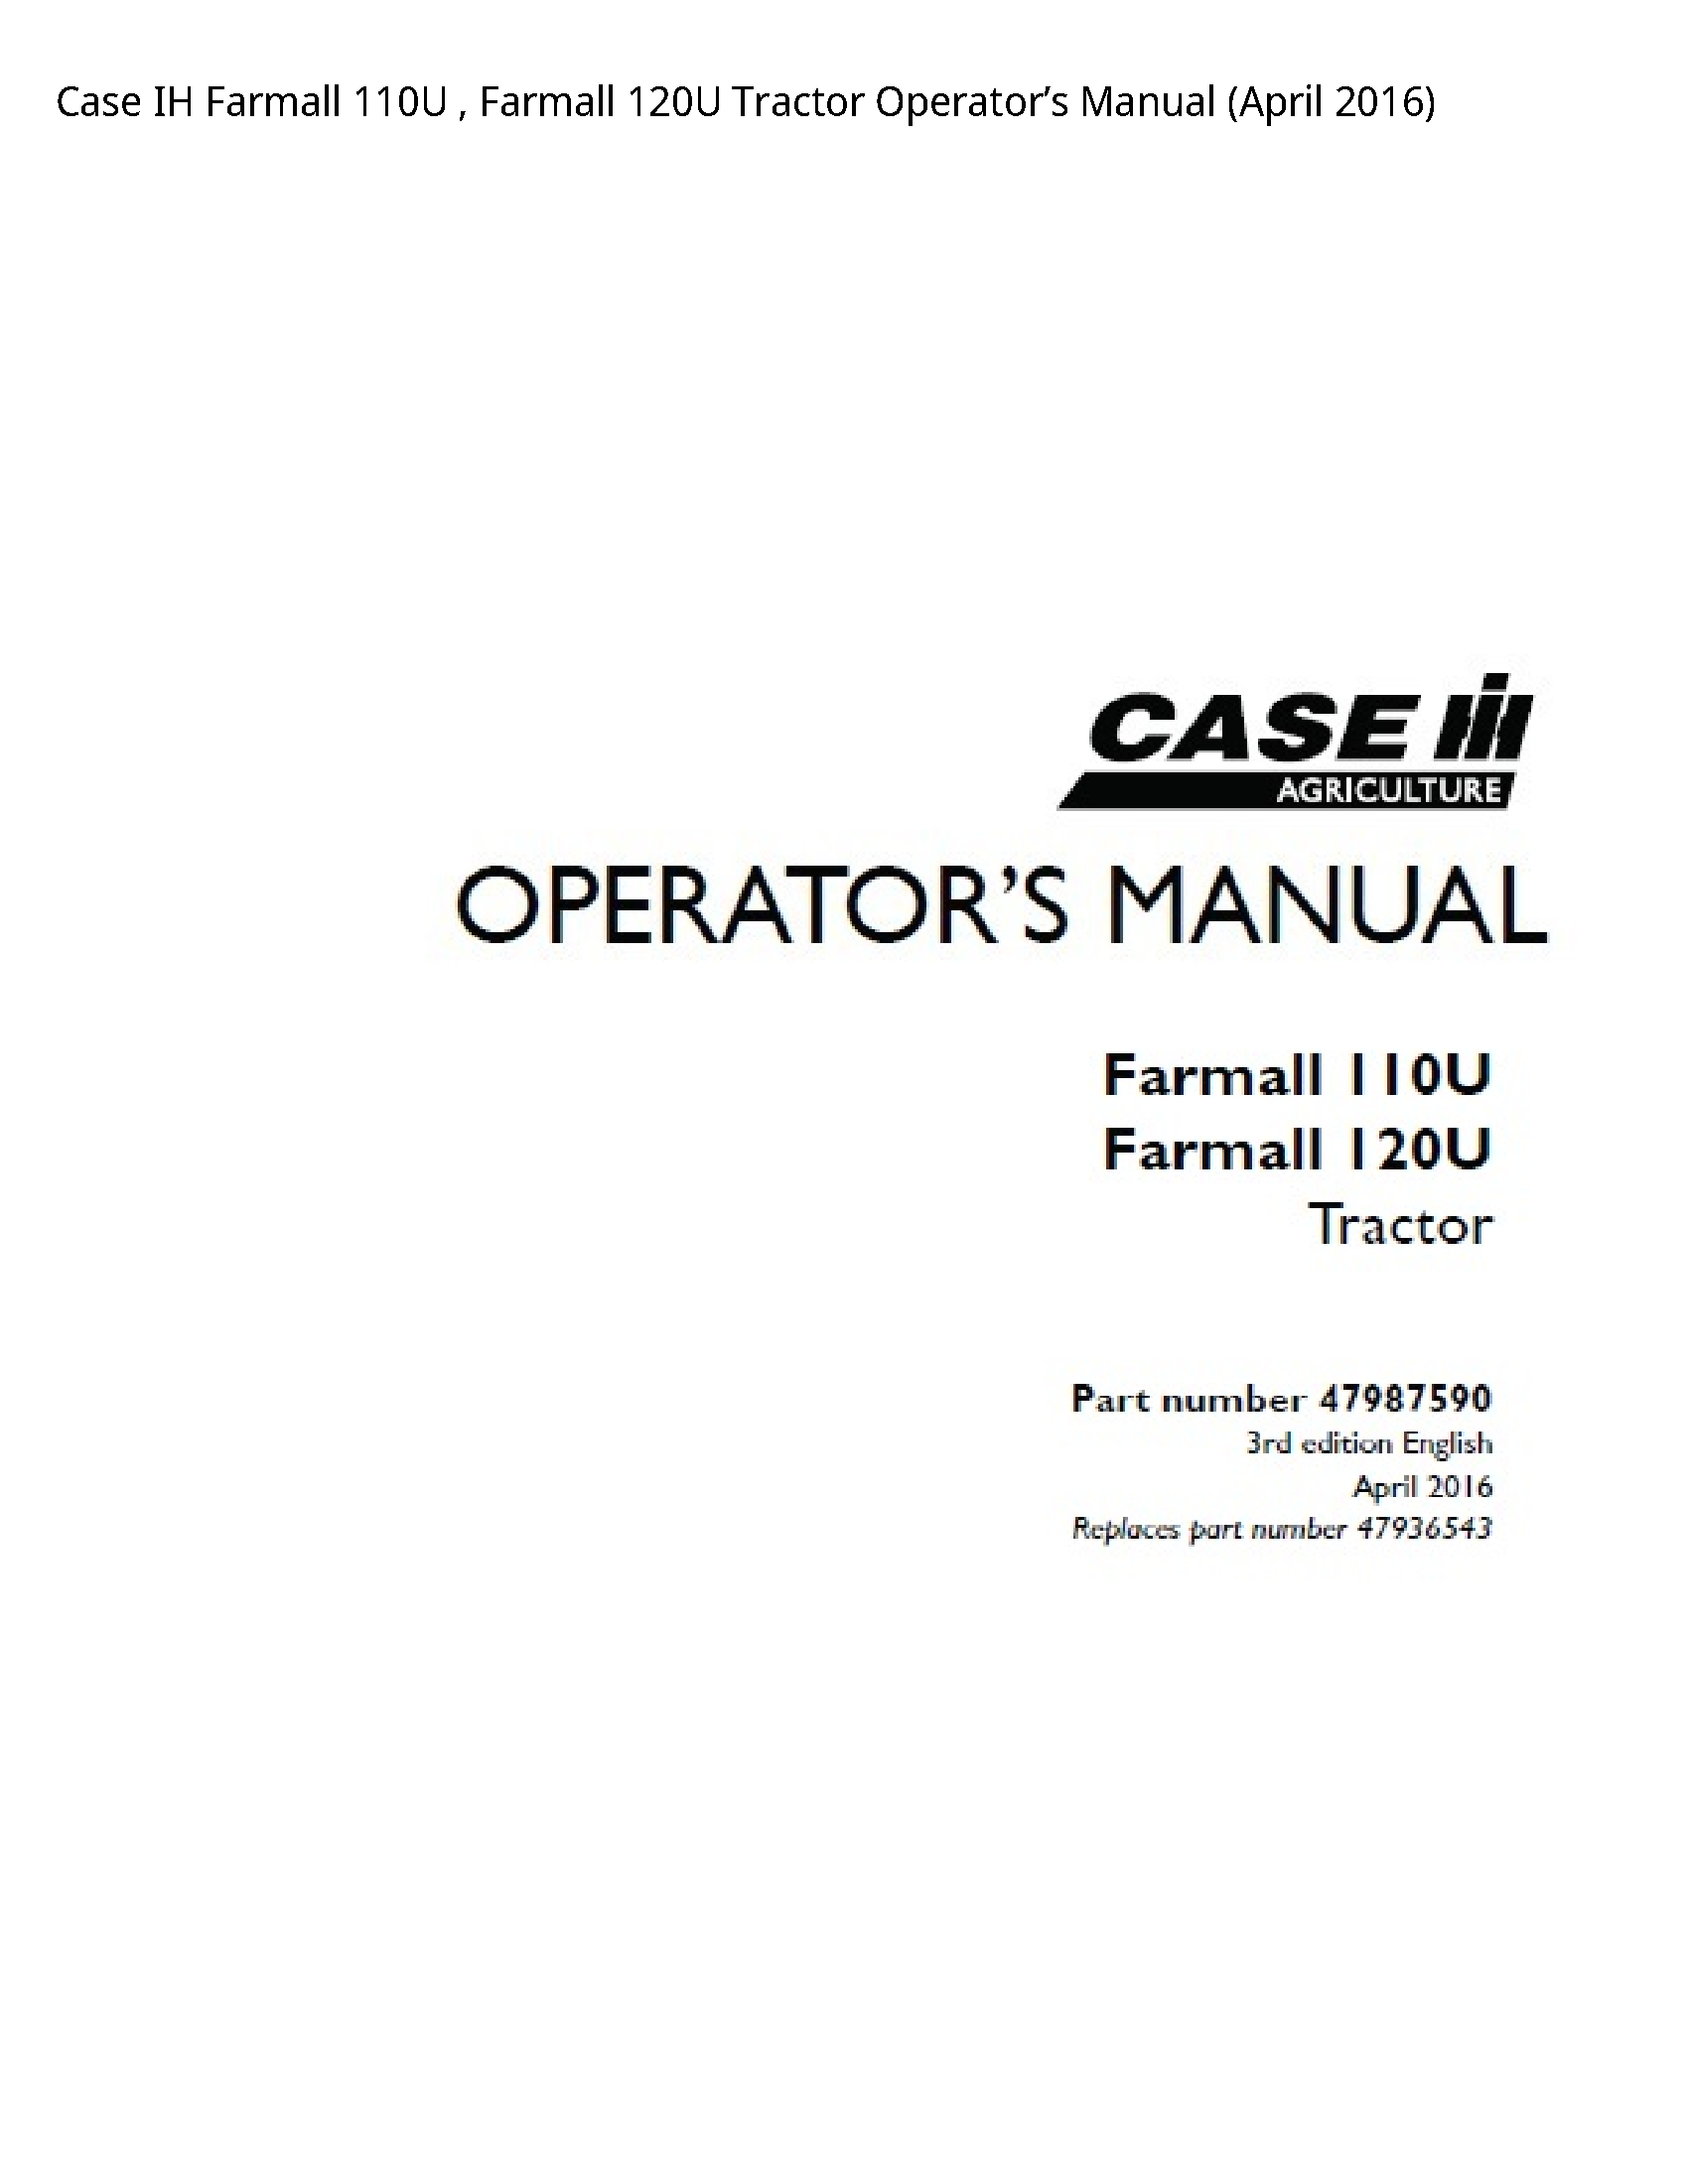 Case/Case IH 110U IH Farmall Farmall Tractor Operator’s manual